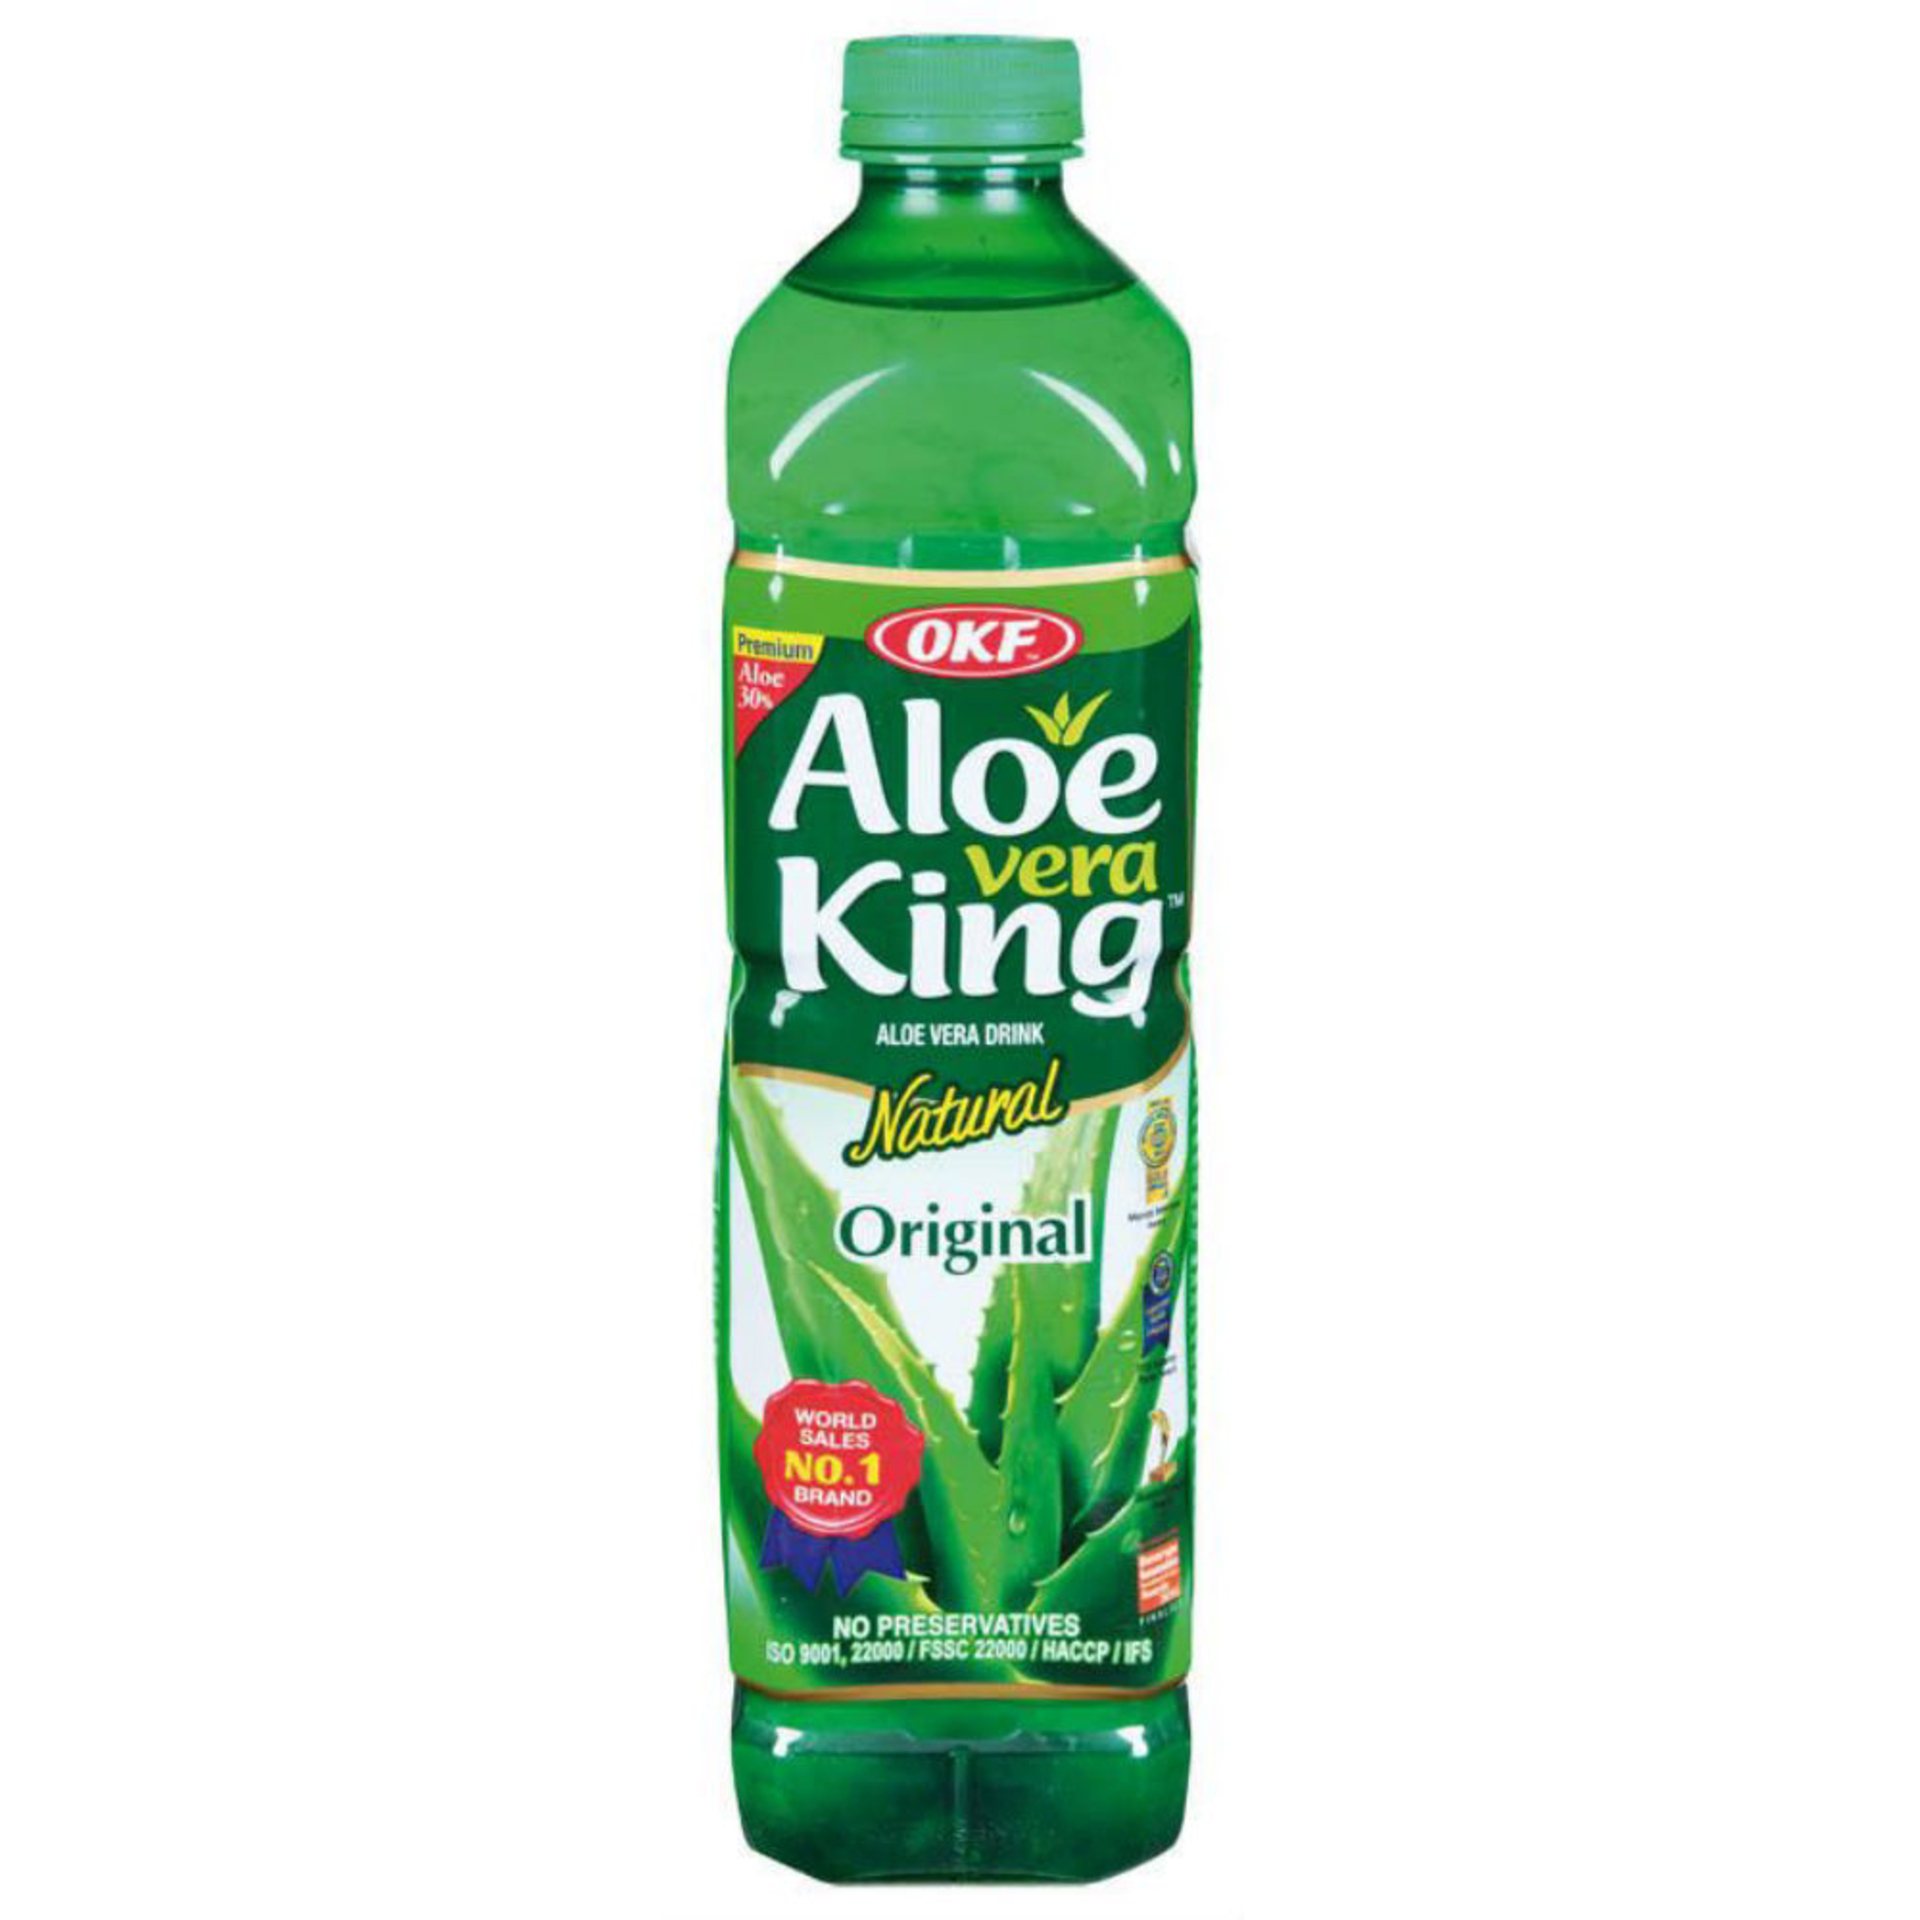 OKF Aloe Vera King Original 1